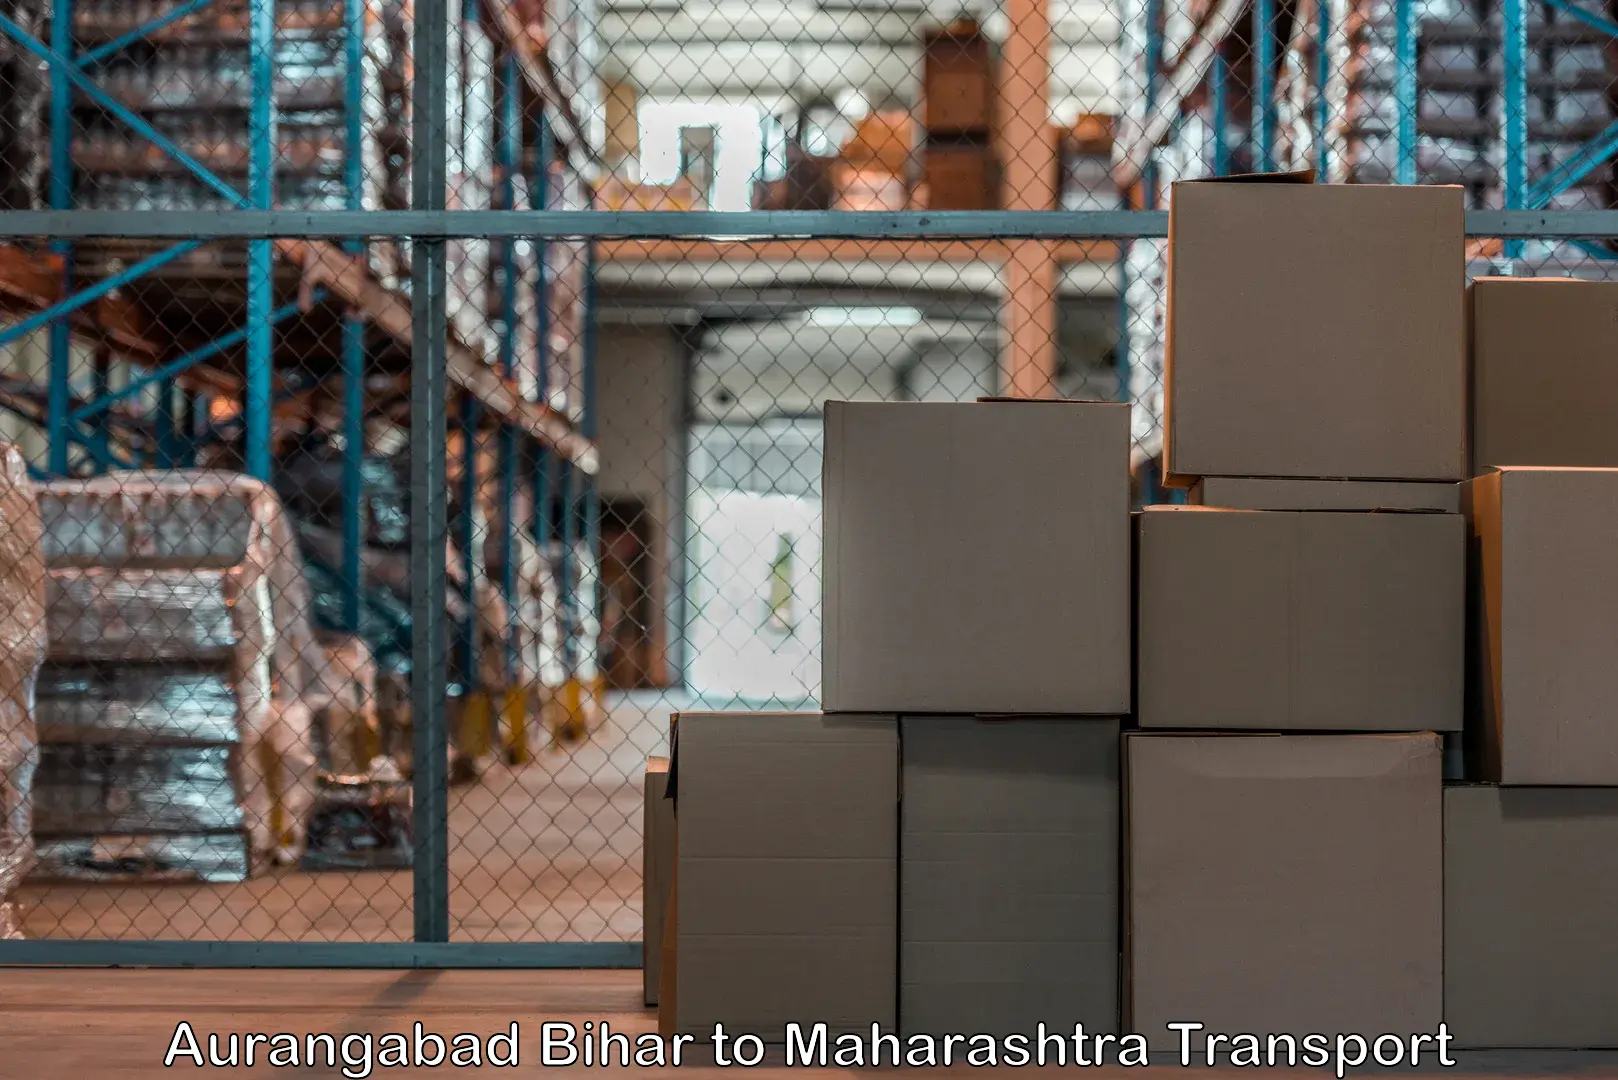 Container transport service Aurangabad Bihar to Dadar